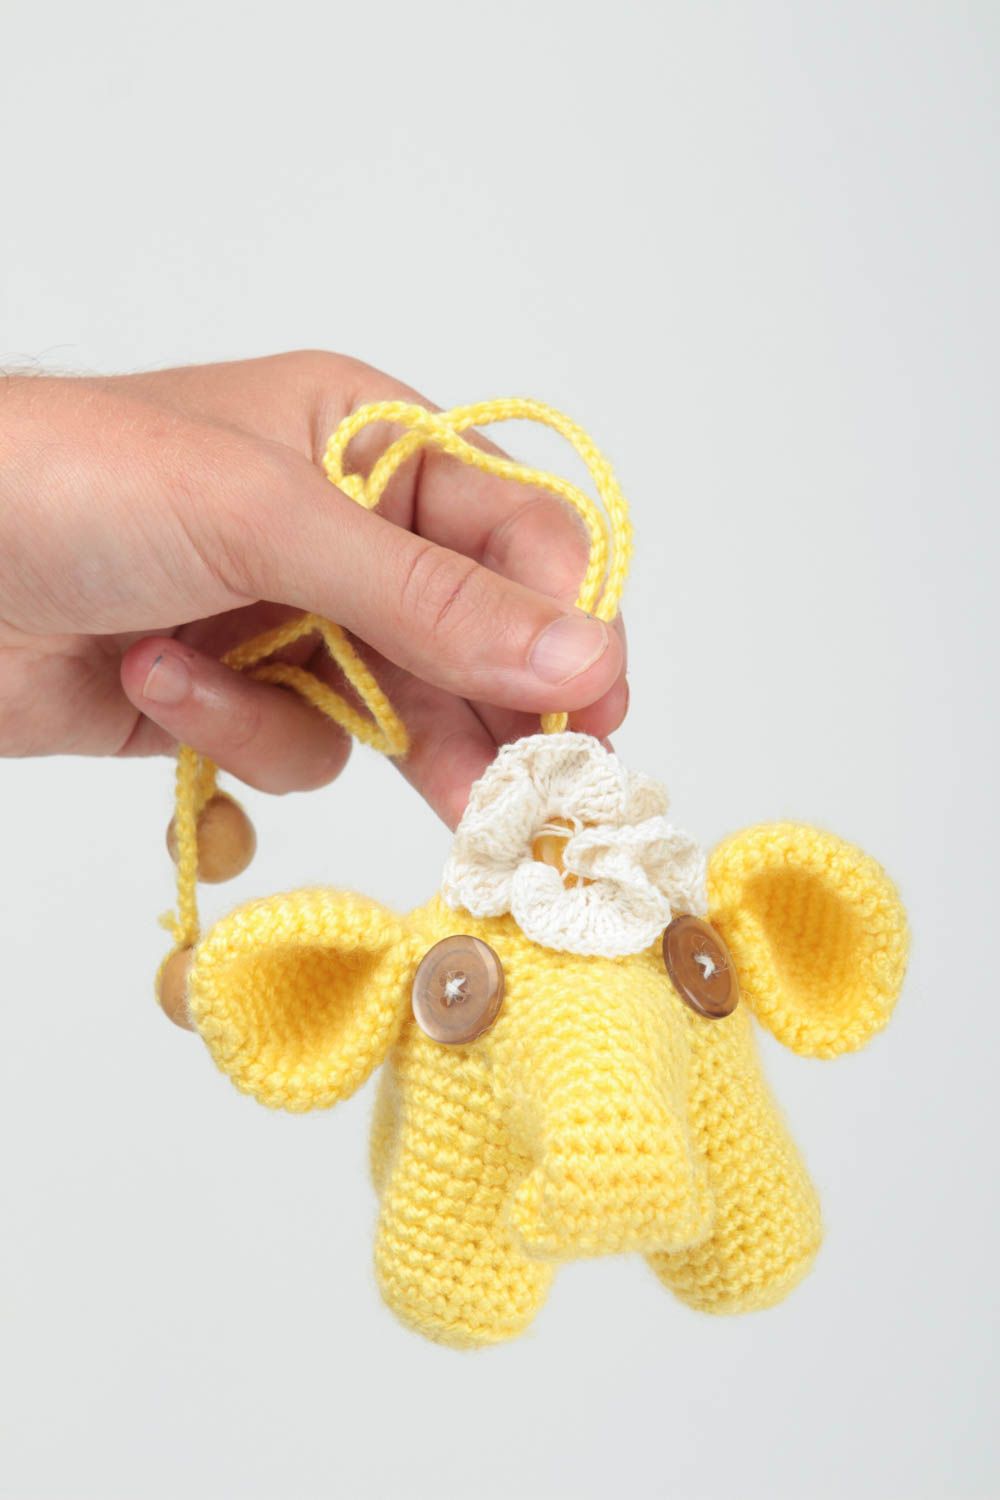 Beautiful handmade crochet toy childrens stuffed soft toy home design gift ideas photo 5